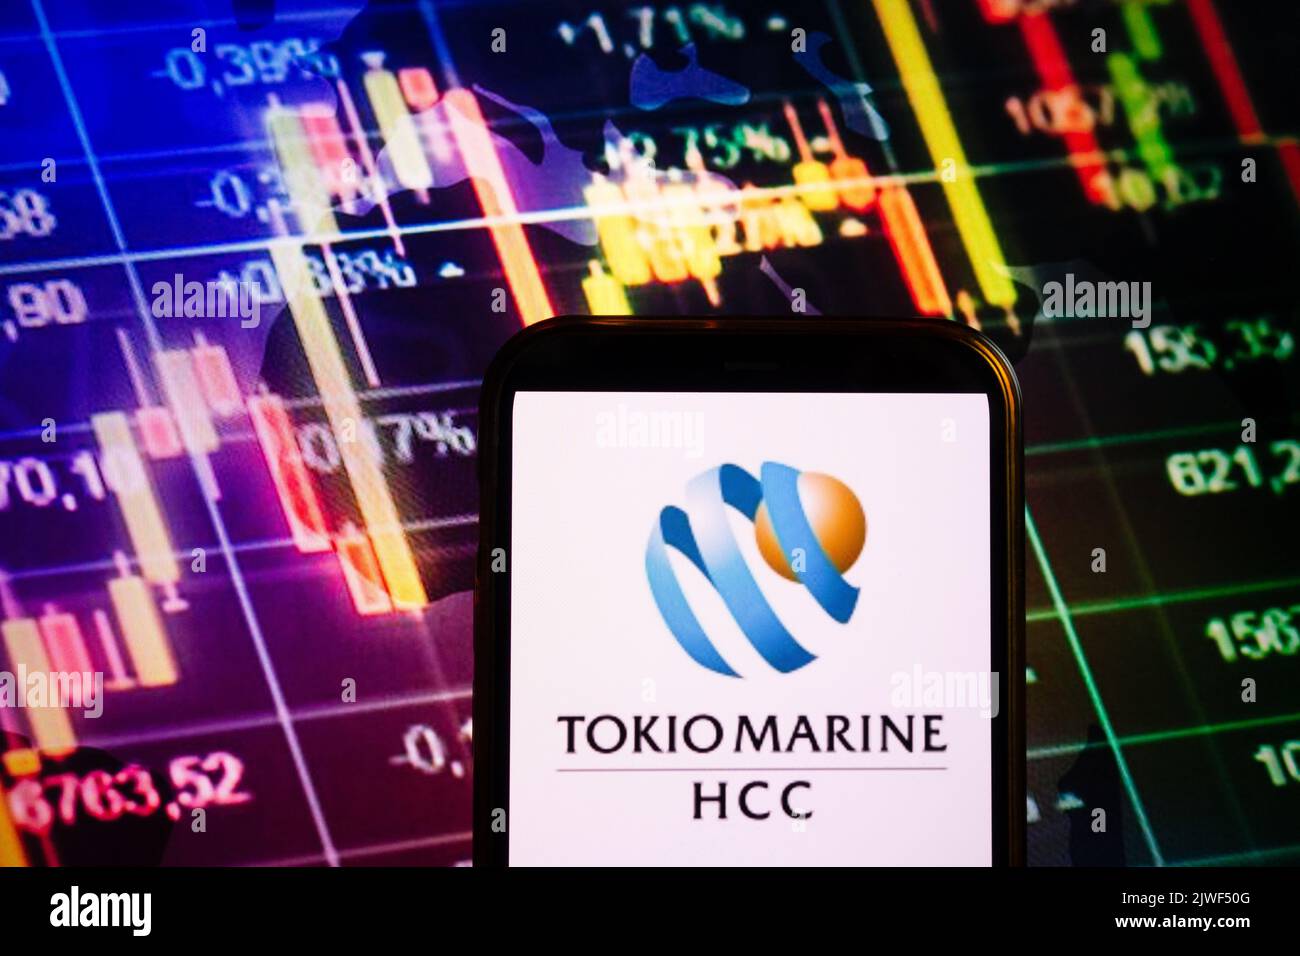 KONSKIE, POLAND - September 04, 2022: Smartphone displaying logo of Tokio Marine company on stock exchange diagram background Stock Photo